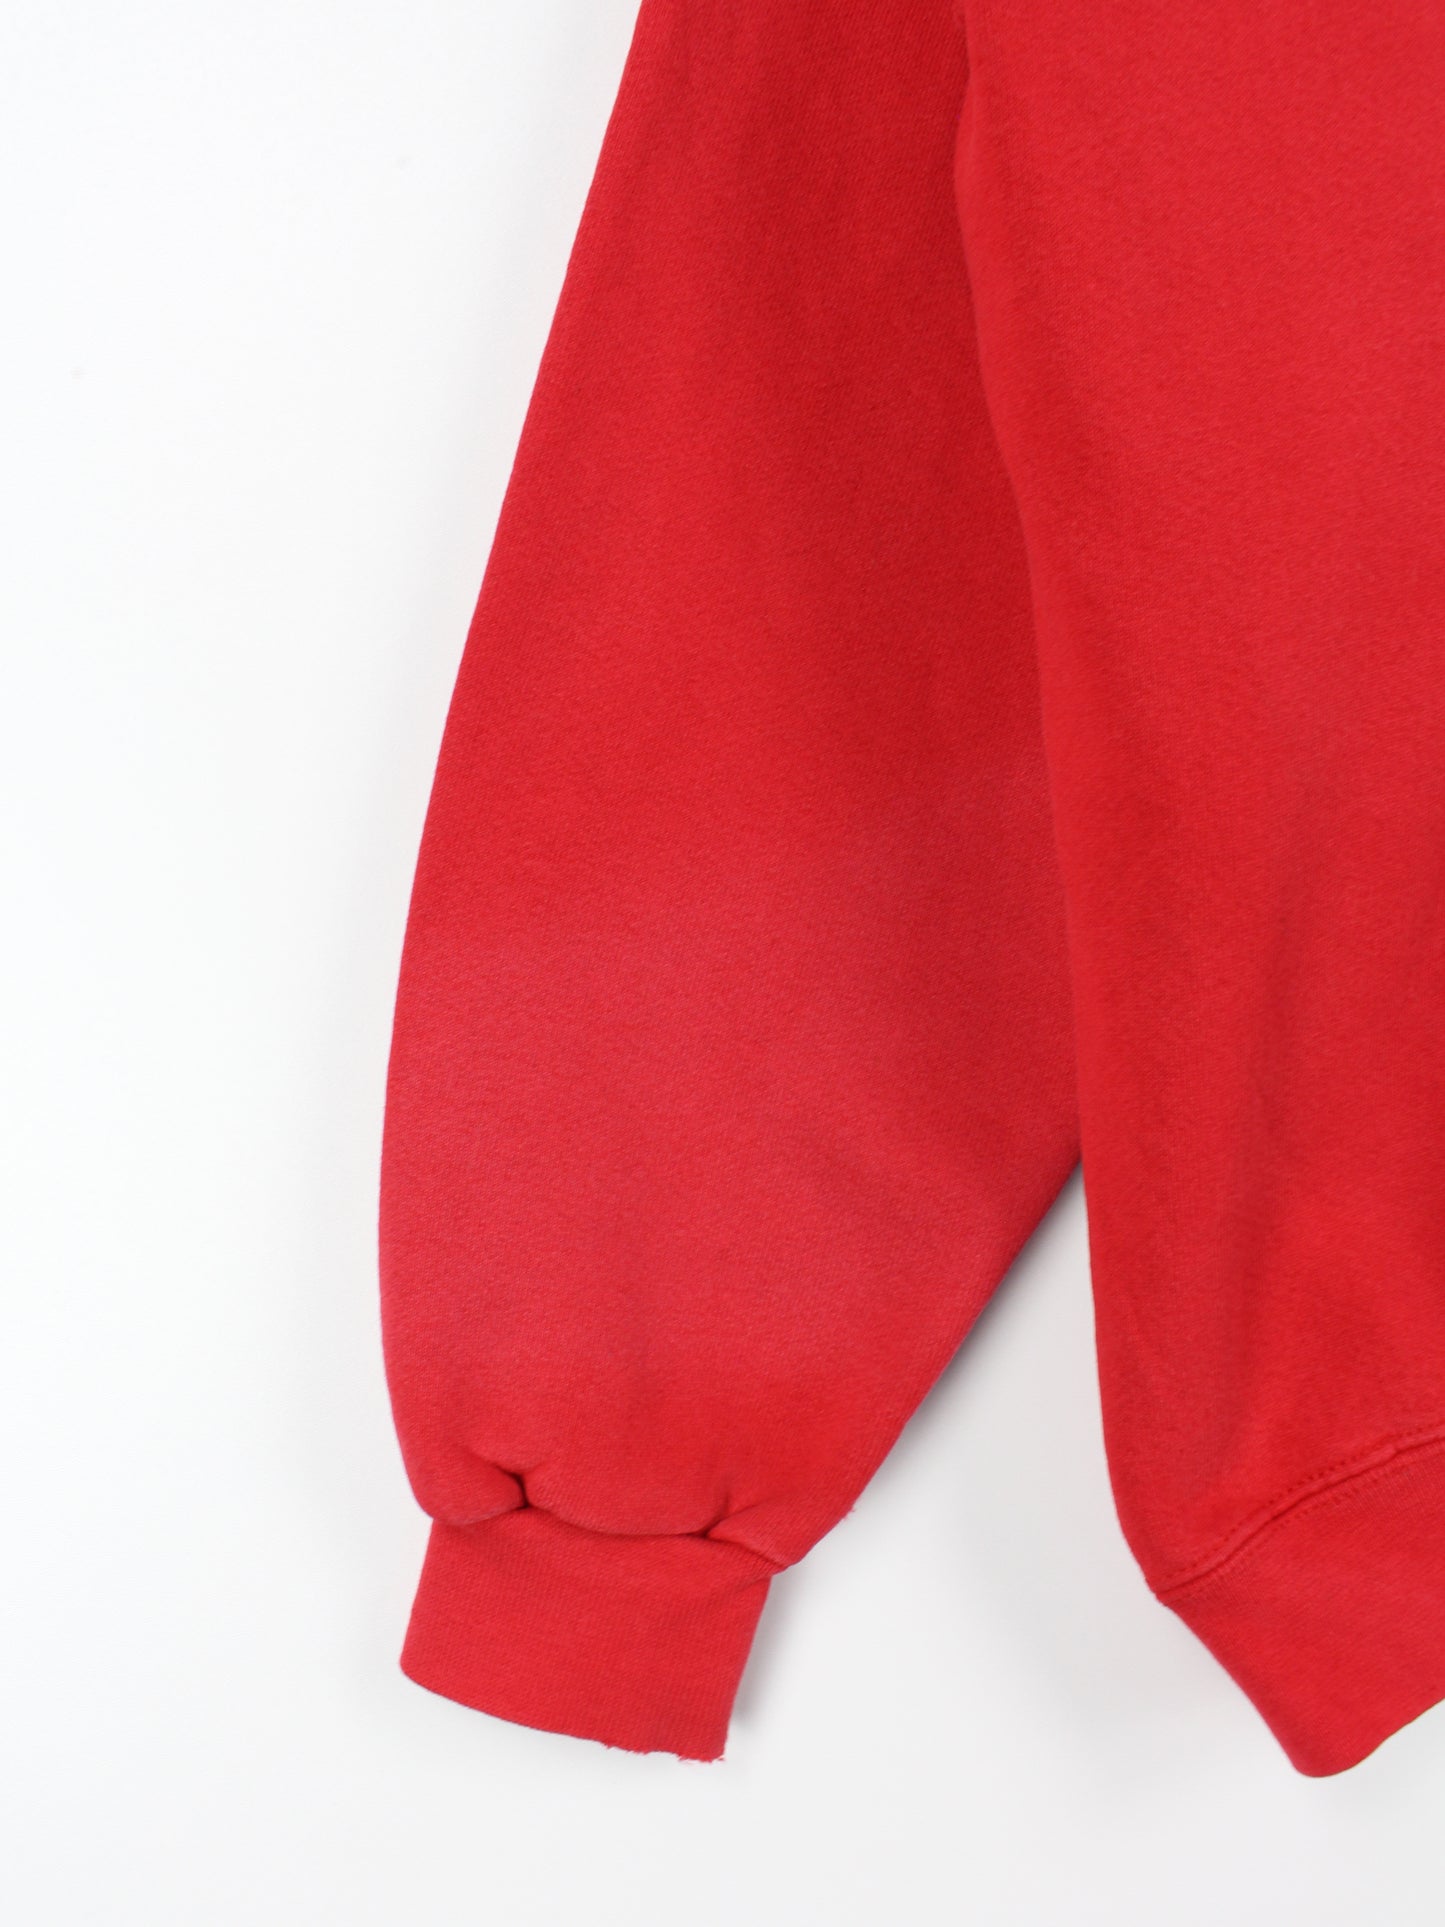 Santee Heavyweight Sweater Rot L